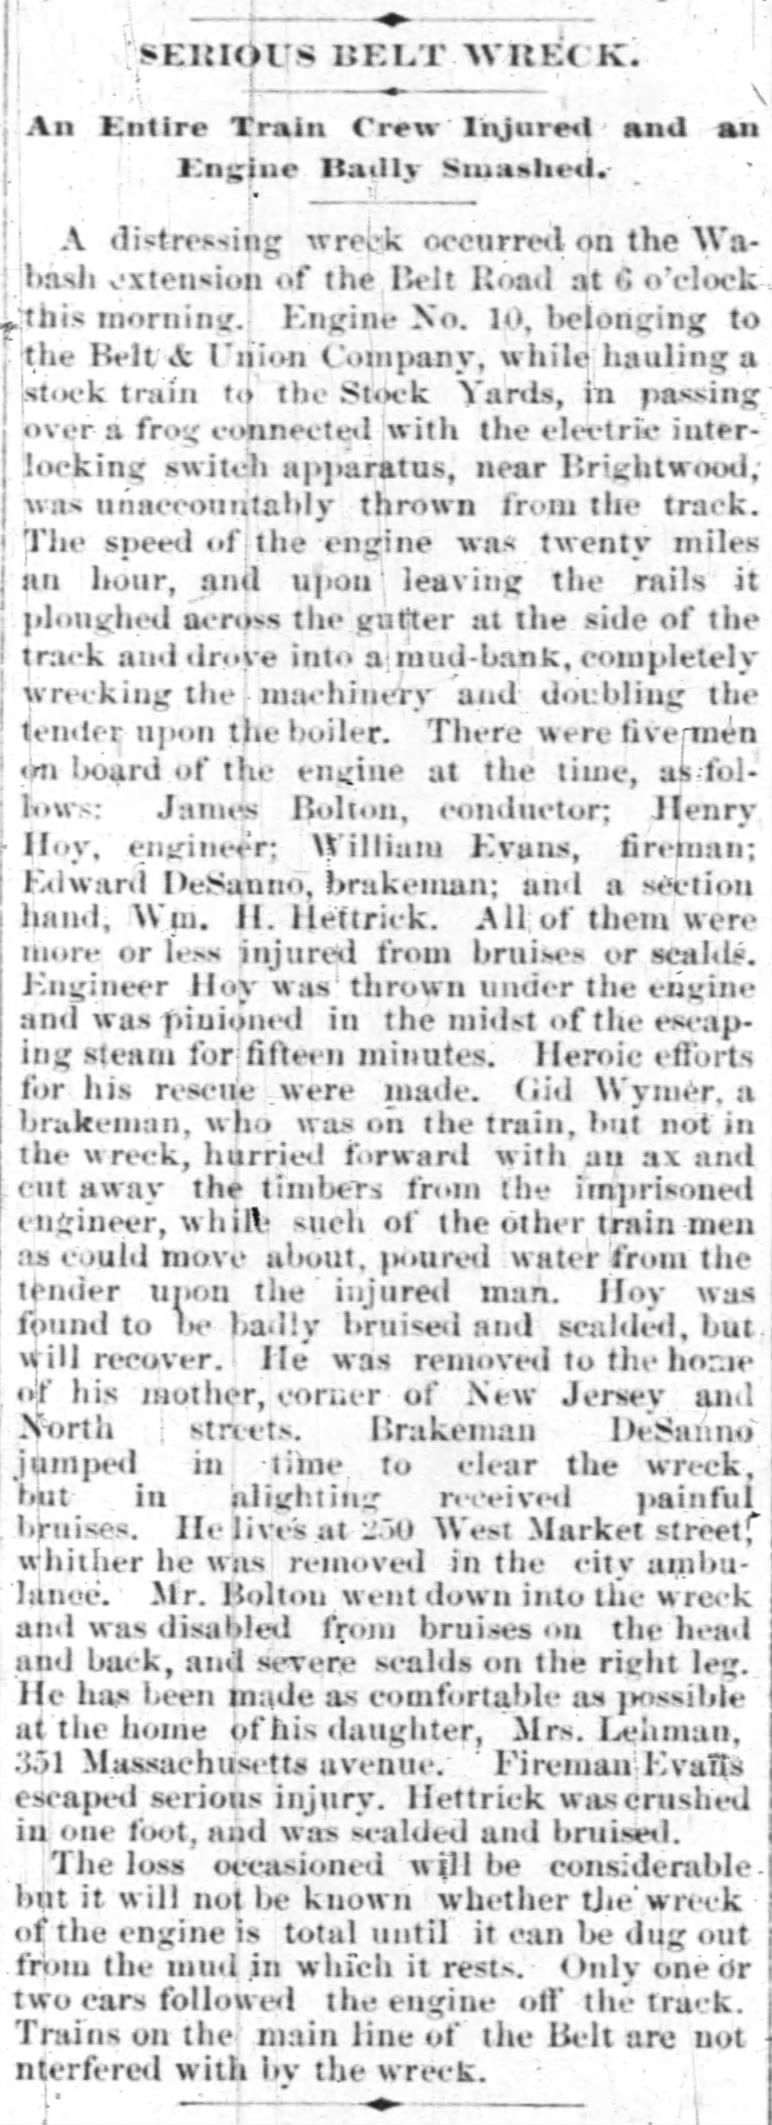 Edward DeSanno
The Indianapolis News, Indianapolis, IN
May 26 1885, Pg 1